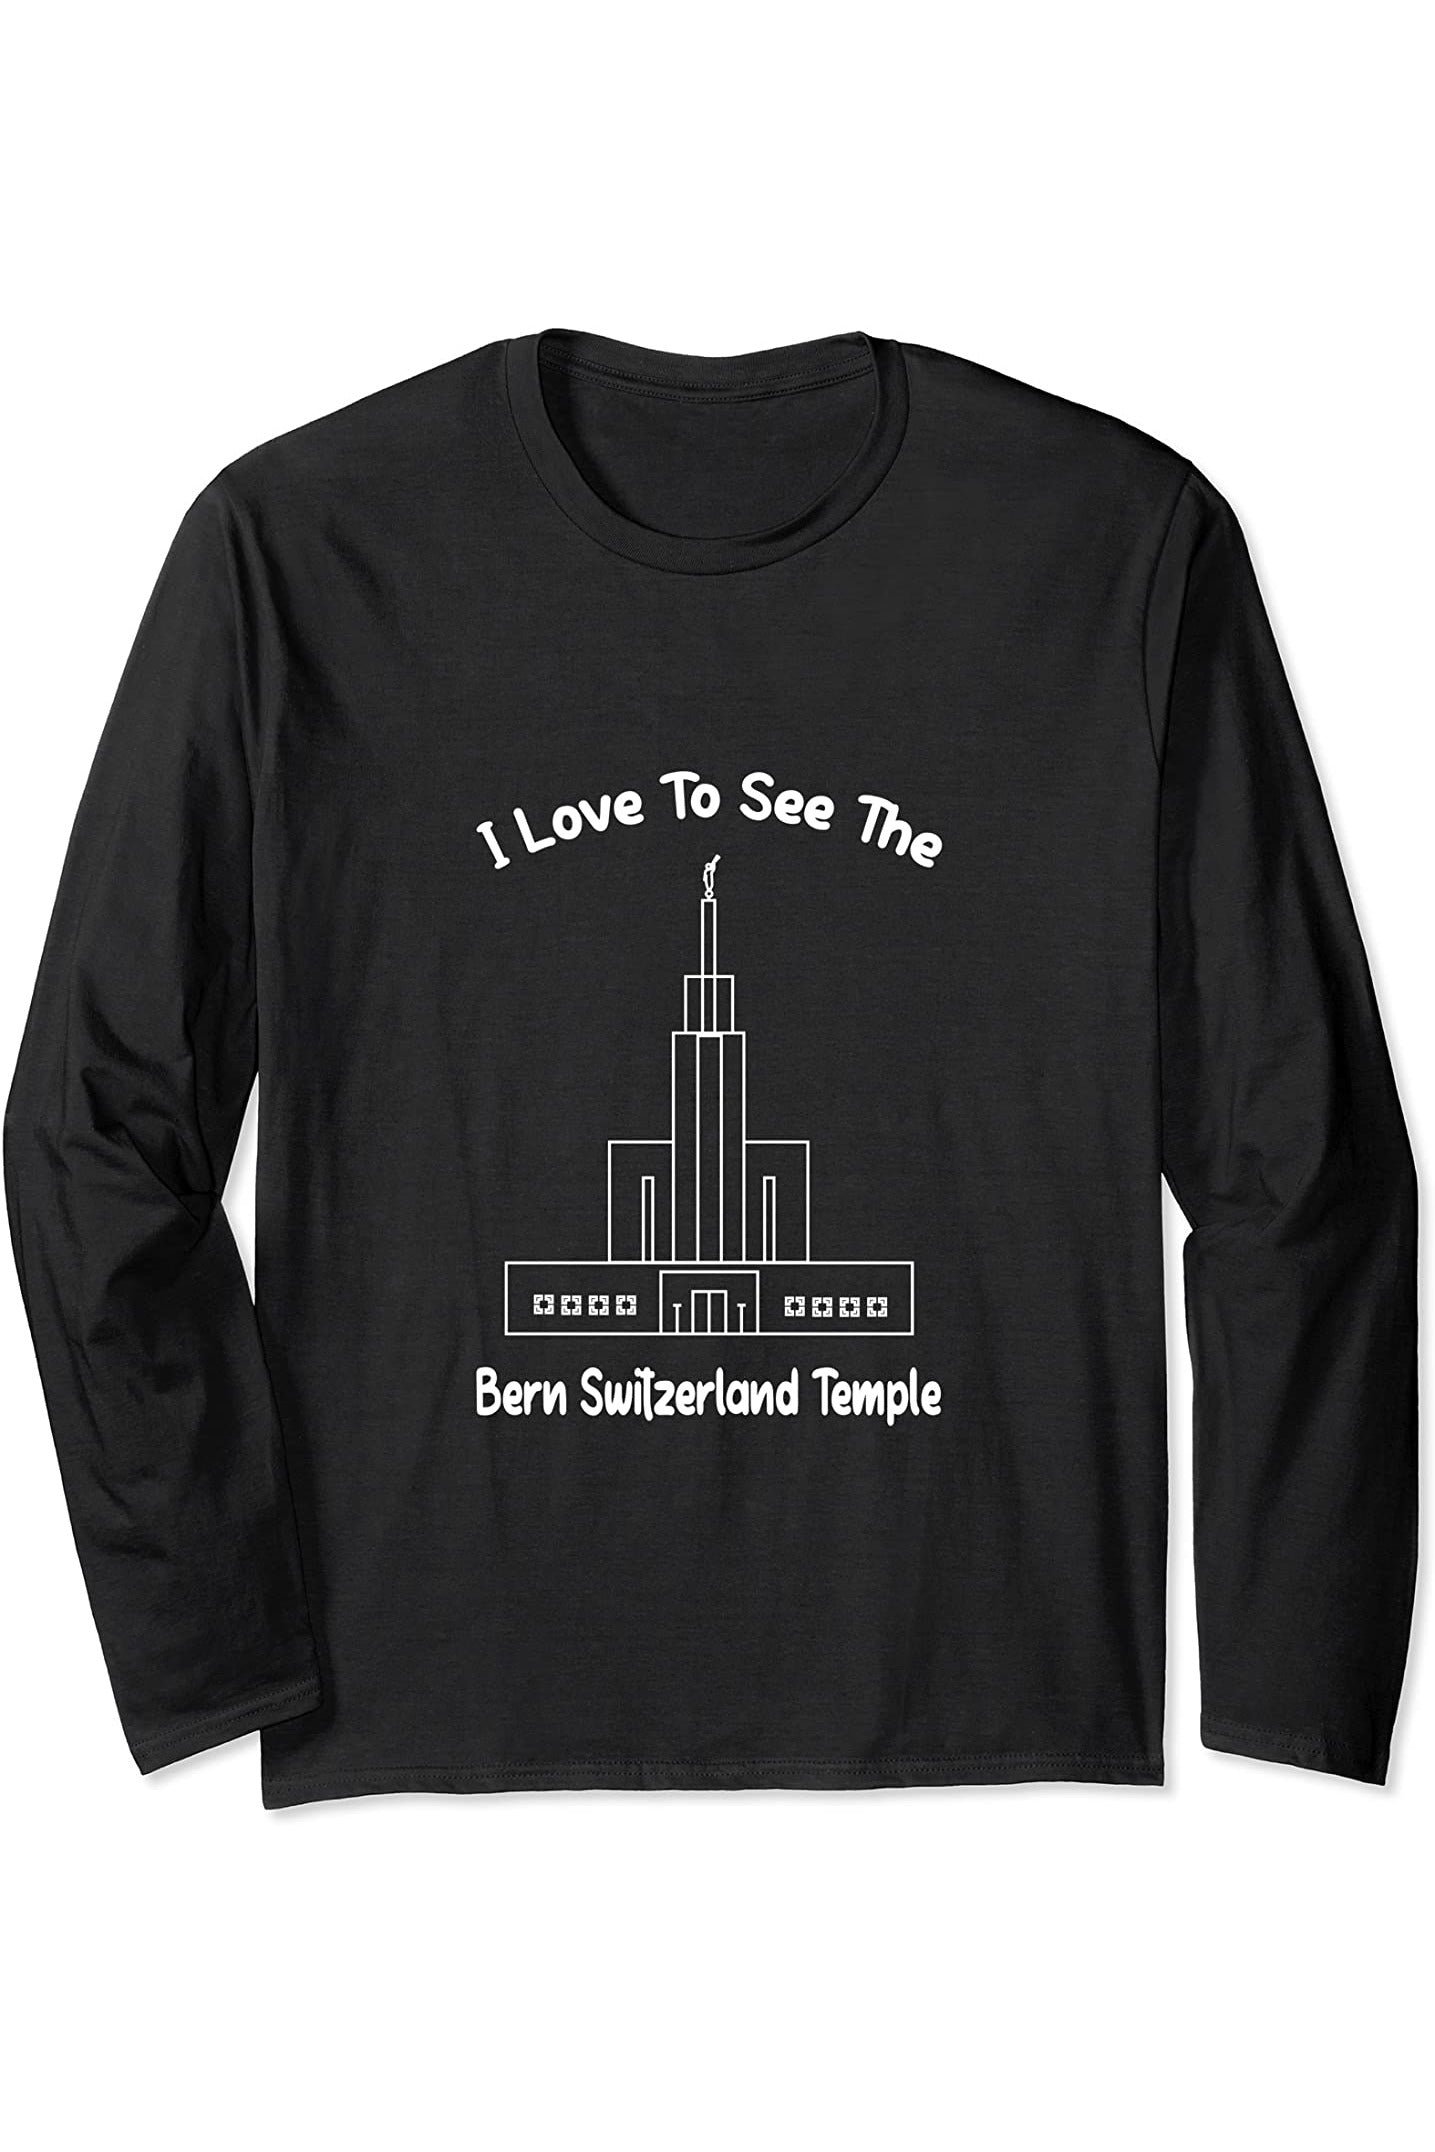 Bern Switzerland Temple Long Sleeve T-Shirt - Primary Style (English) US